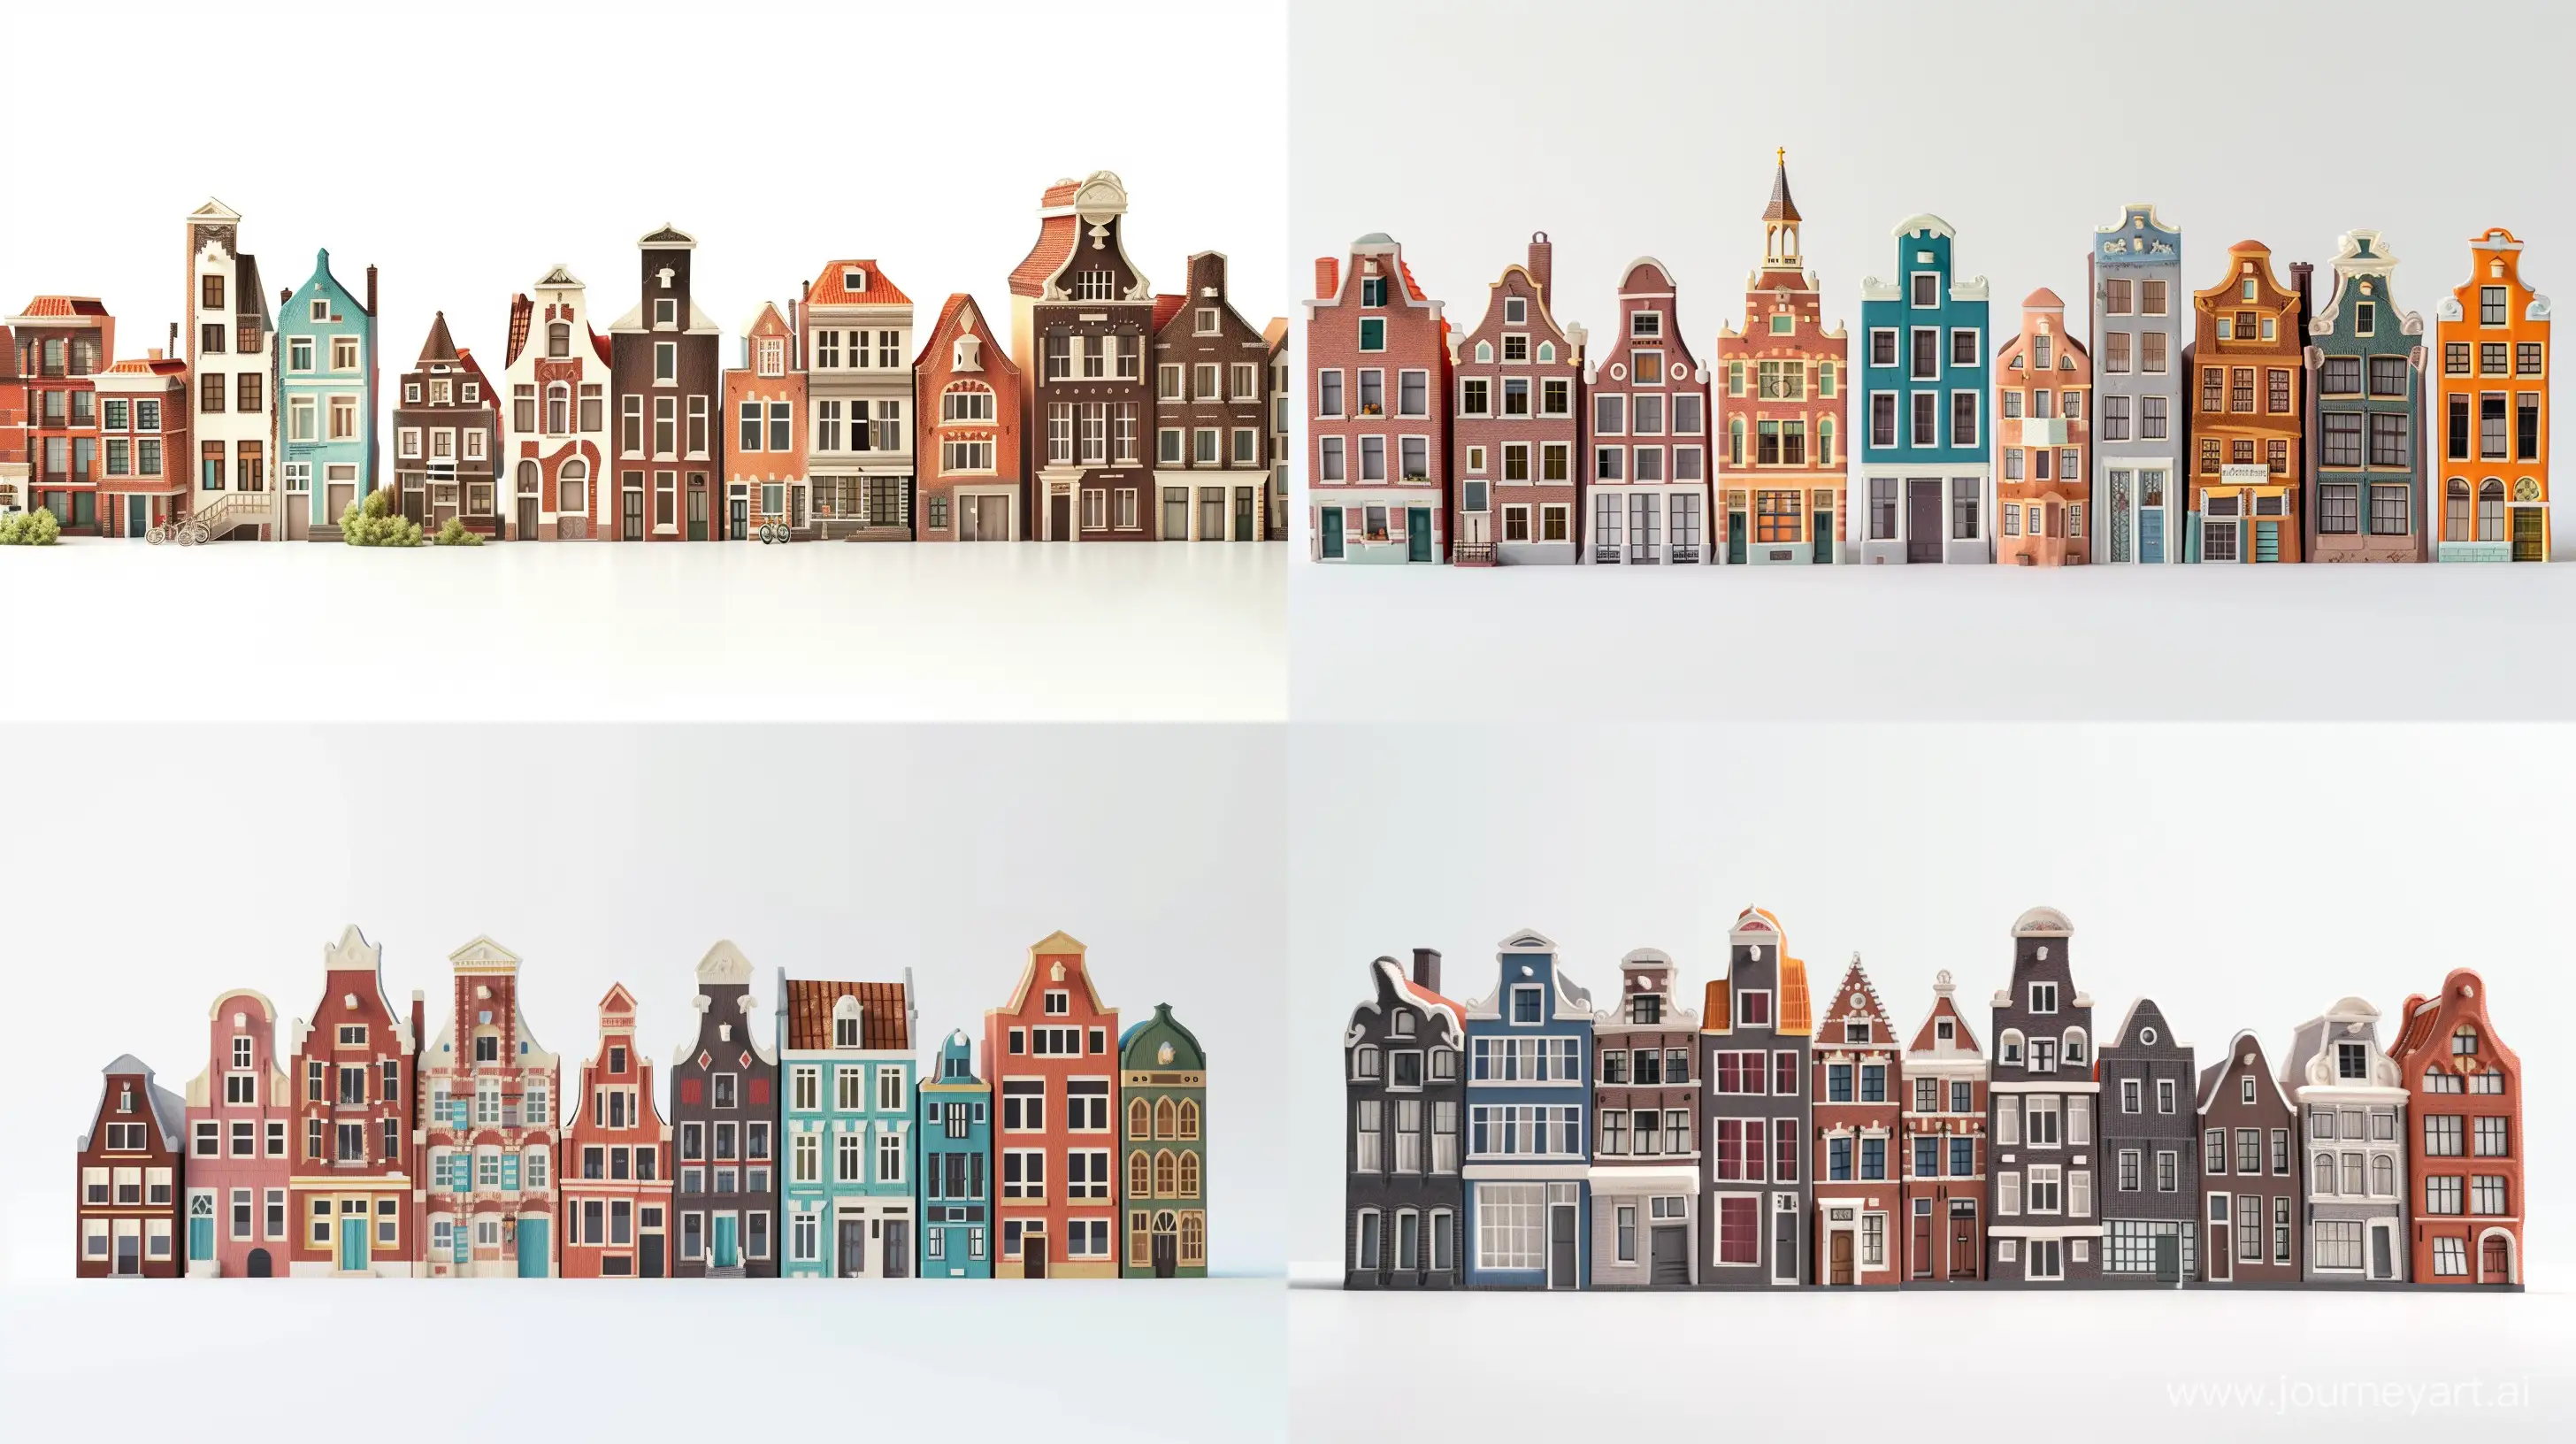 Whimsical-3D-Amsterdam-Houses-in-Johanna-Basford-Style